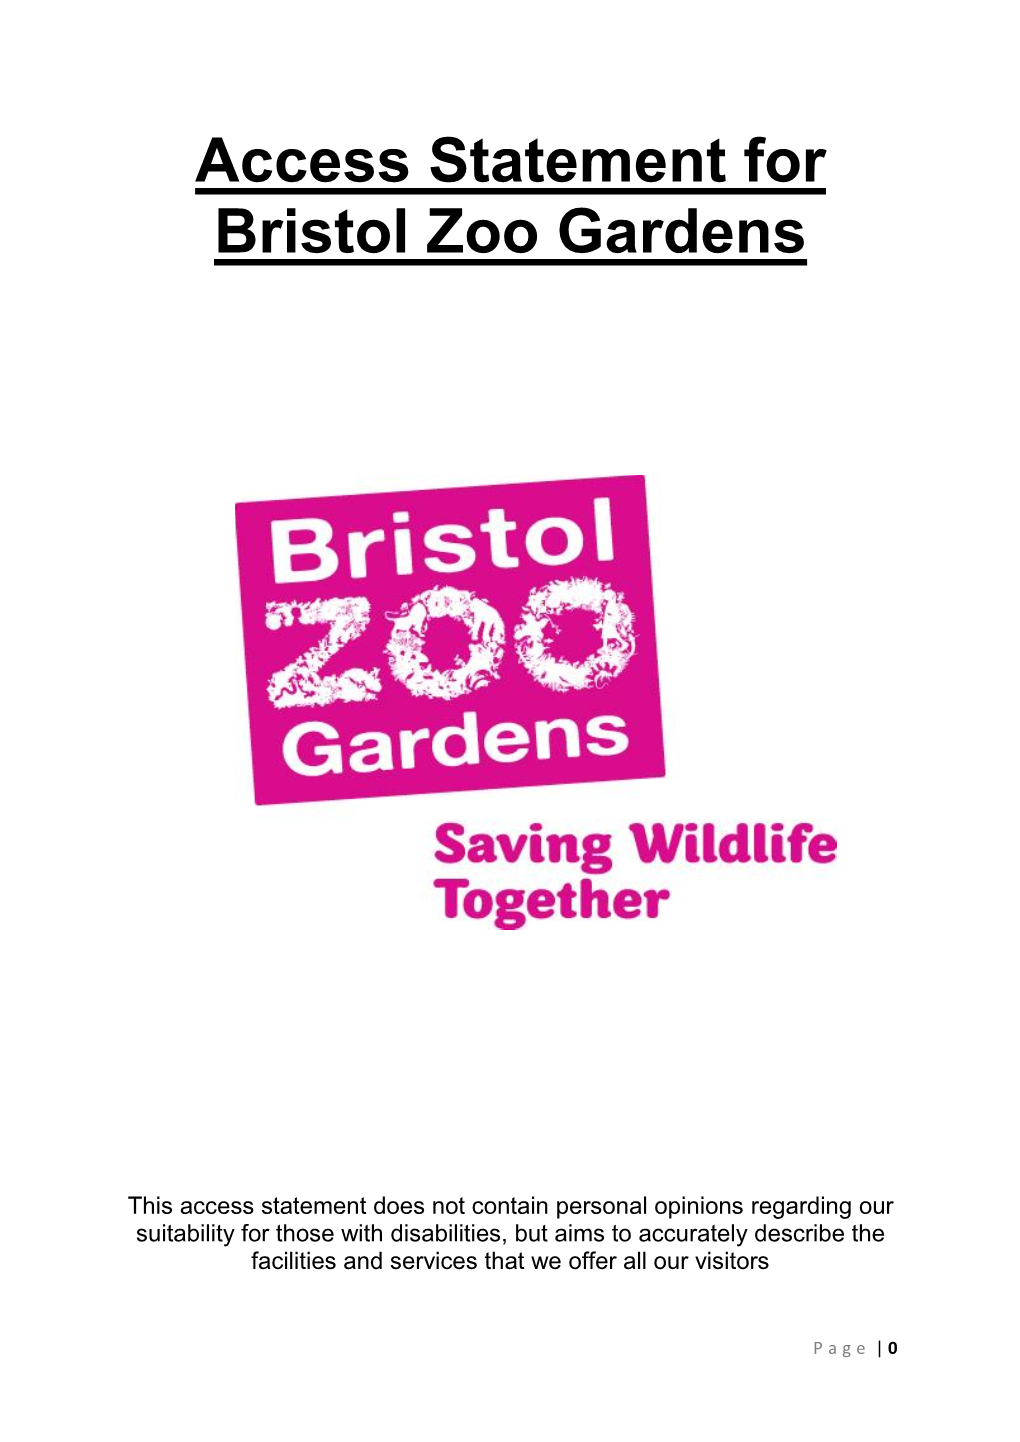 Access Statement for Bristol Zoo Gardens